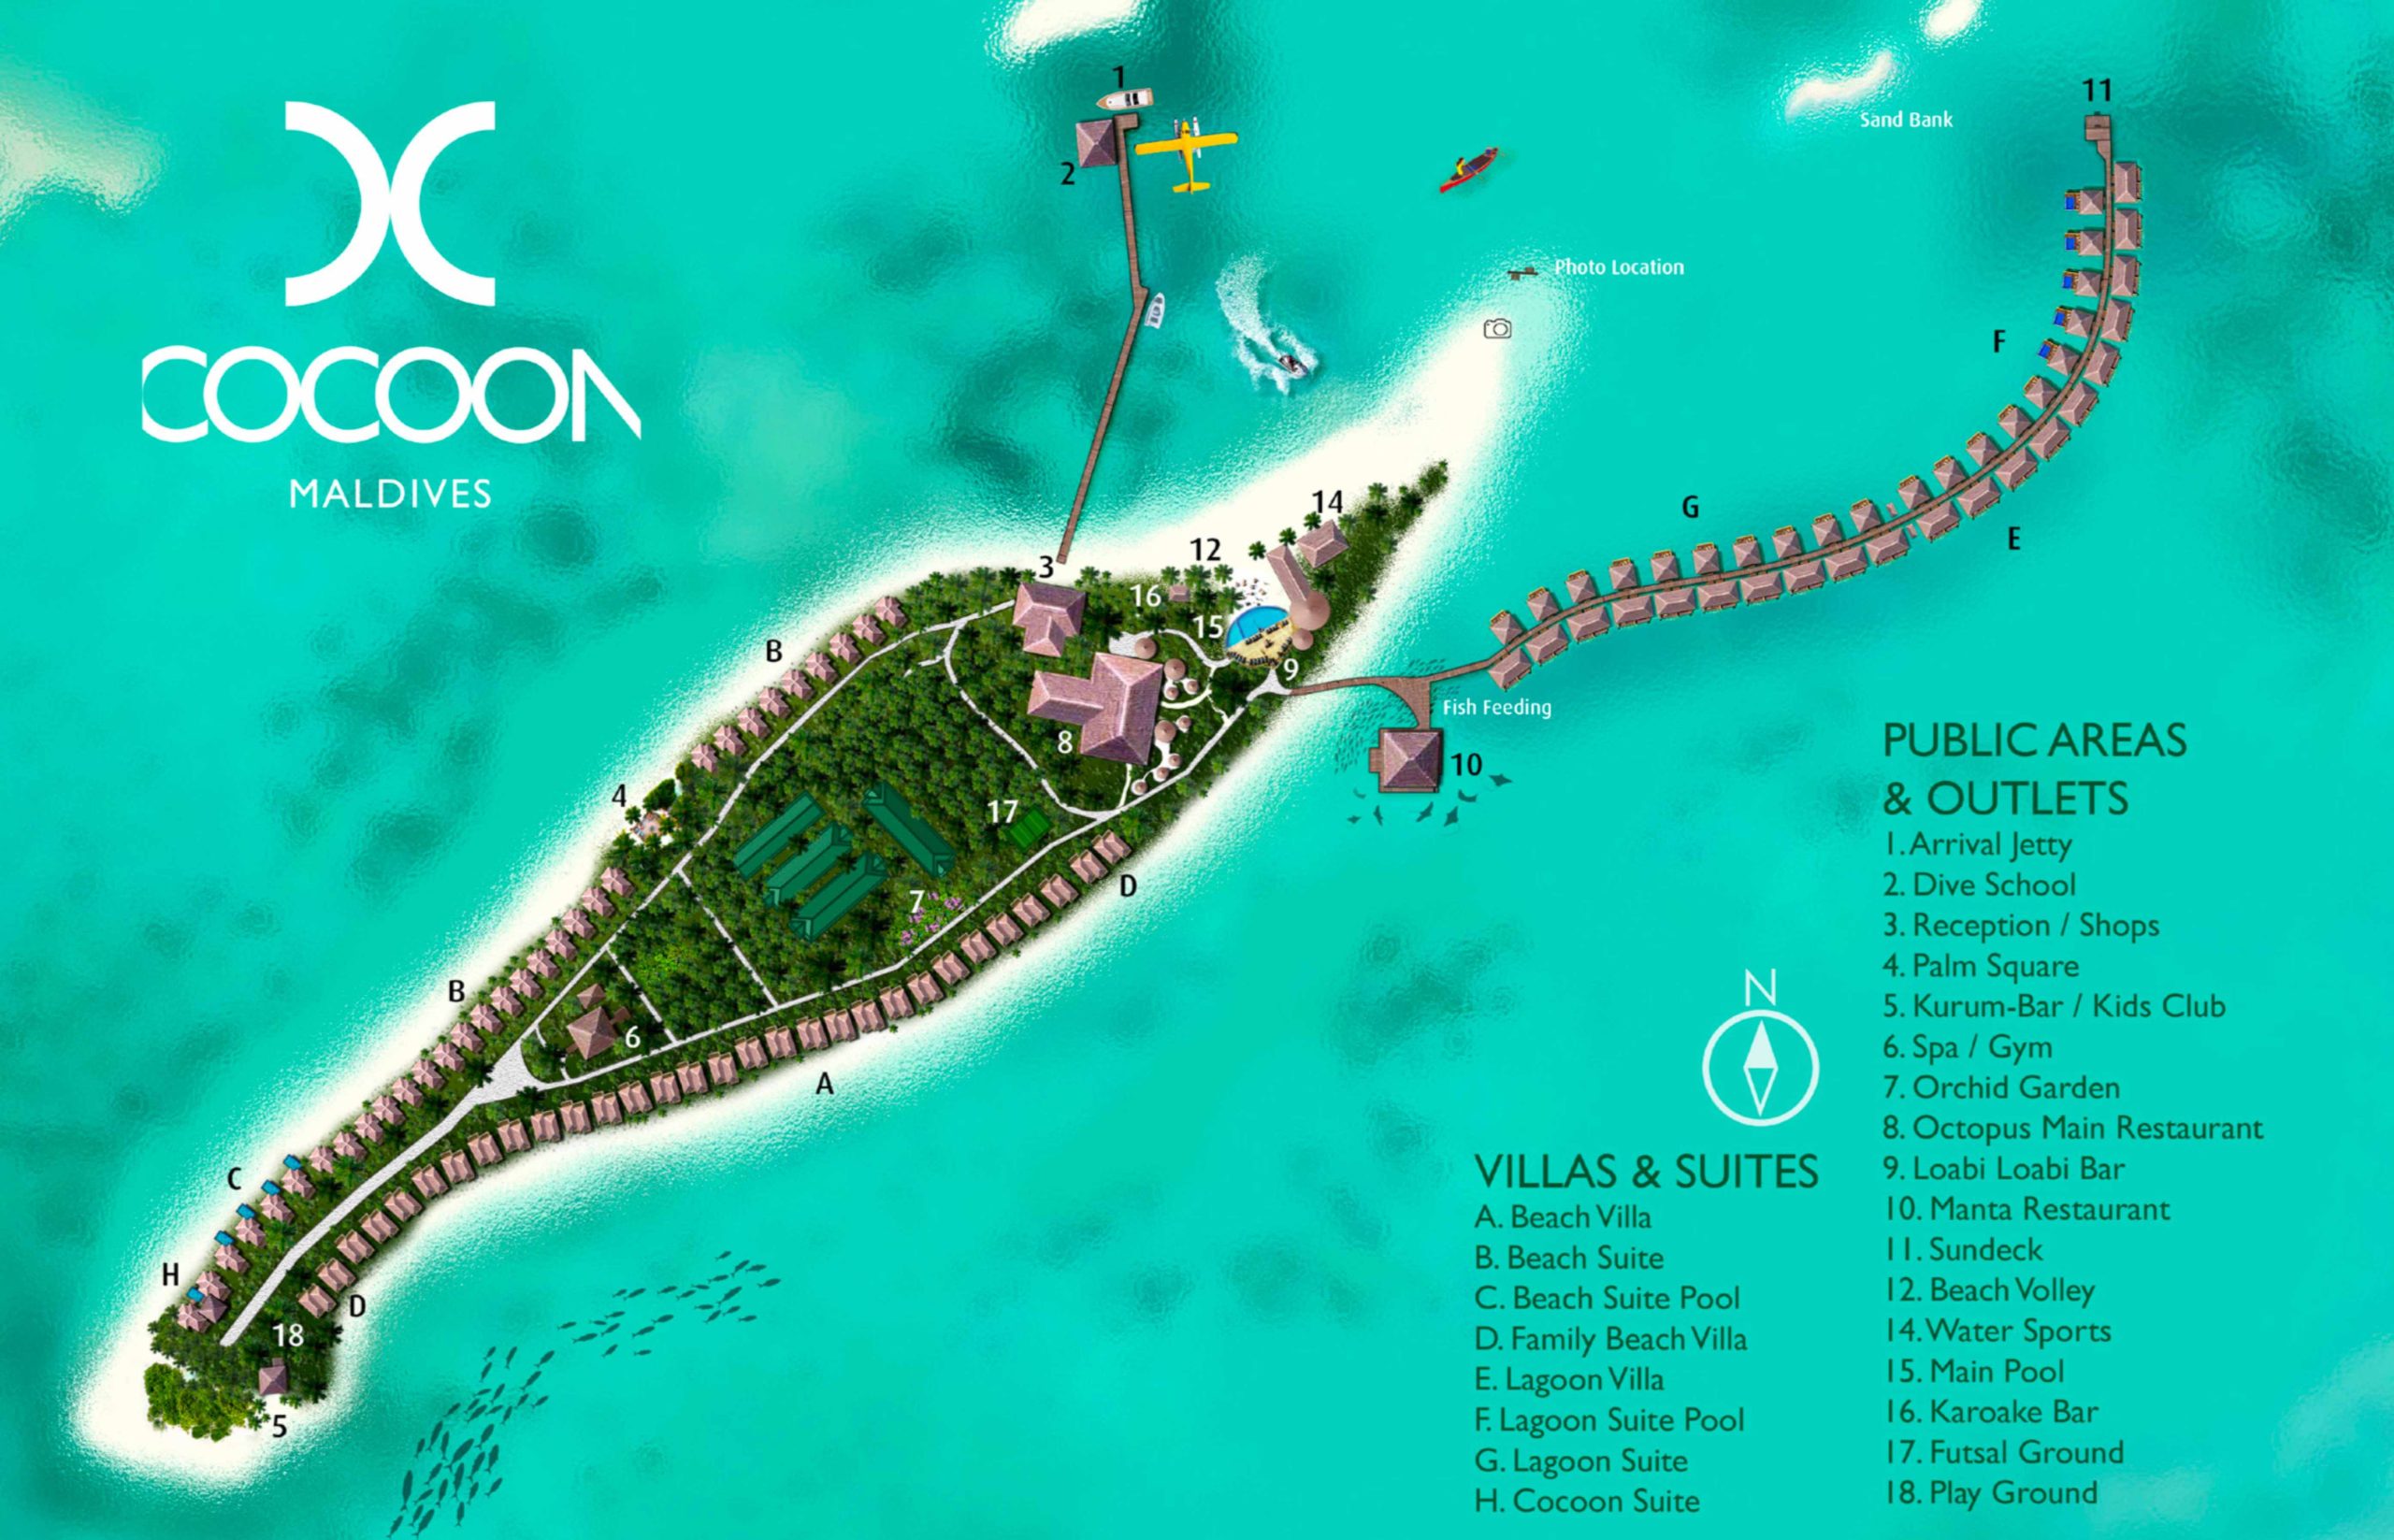 Cocoon Maldives Resort - Ookolhufinolhu, Lhaviyani Atoll, Maldives - Resort Map